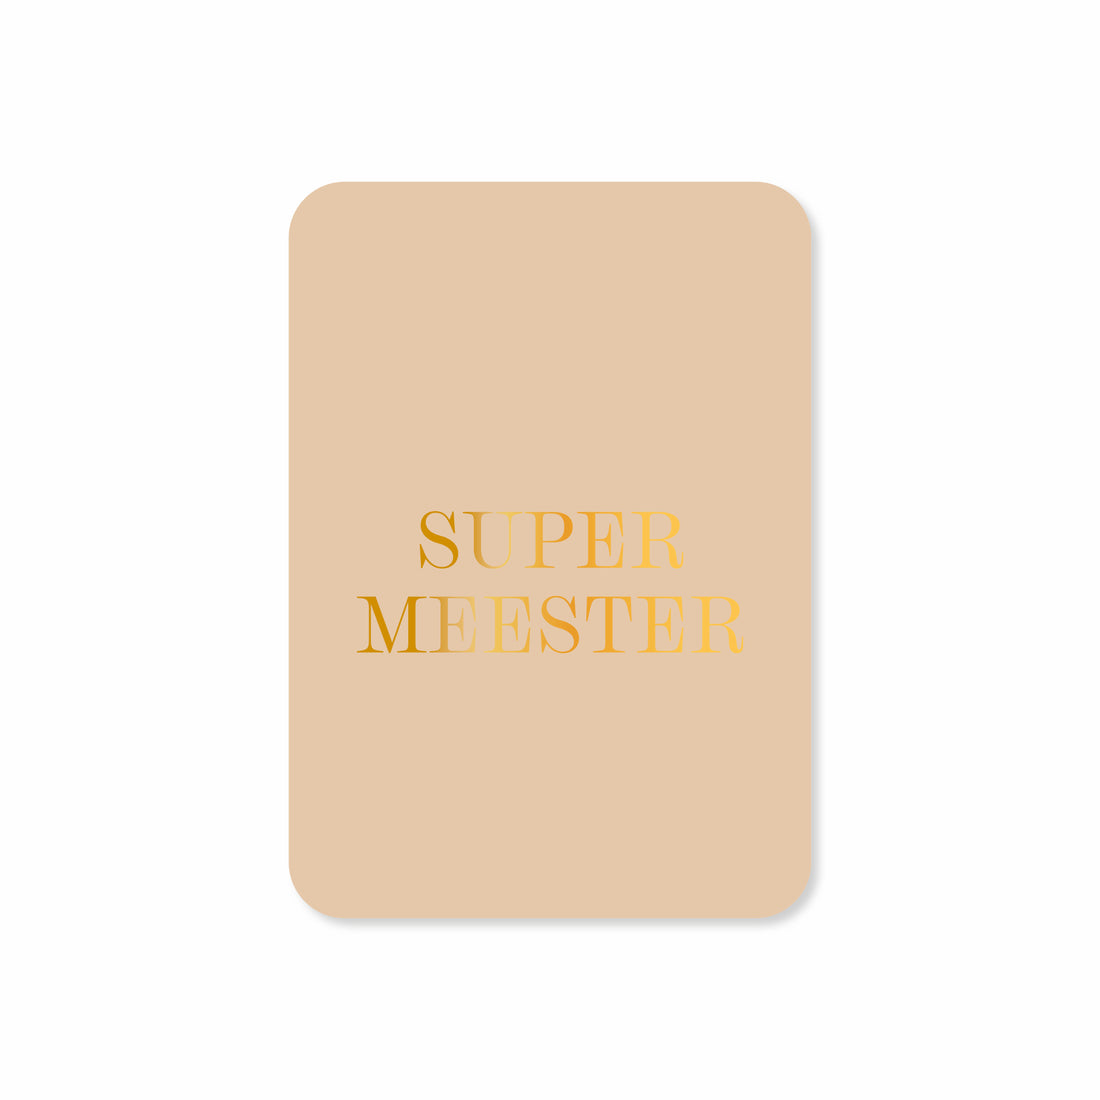 Minikaart Super meester (met goudfolie)